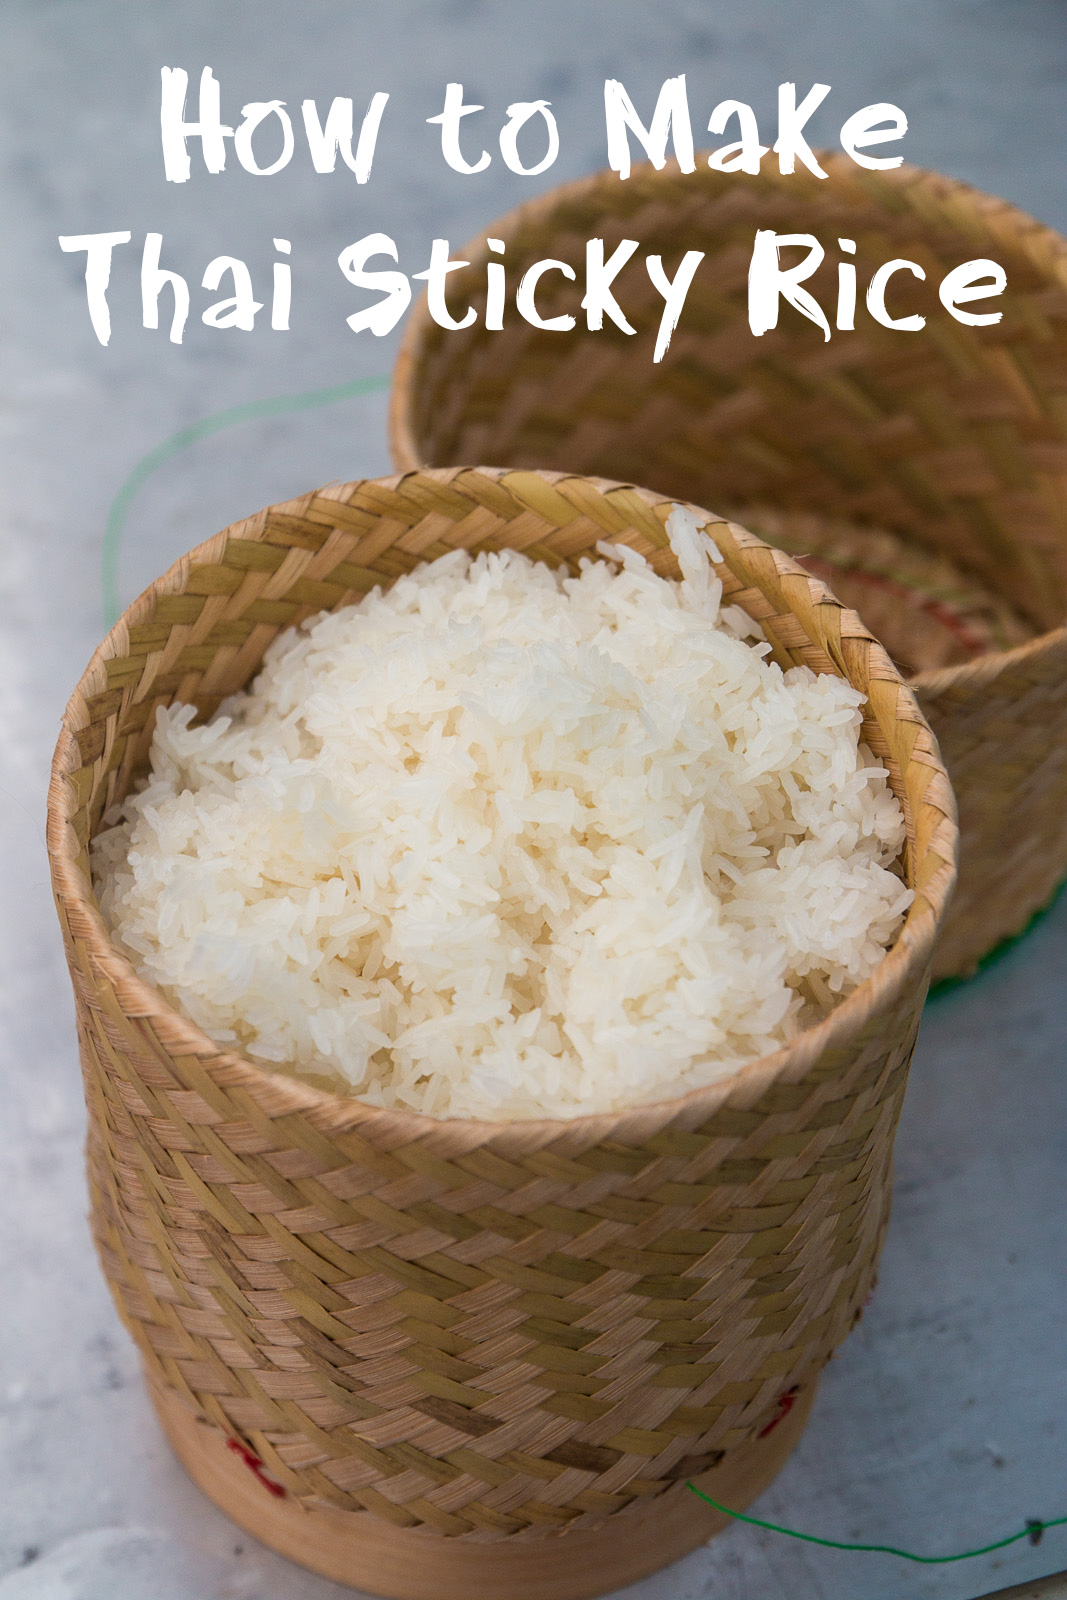 Thai Sticky Rice Recipe - Using Instant Pot Pressure Cooker